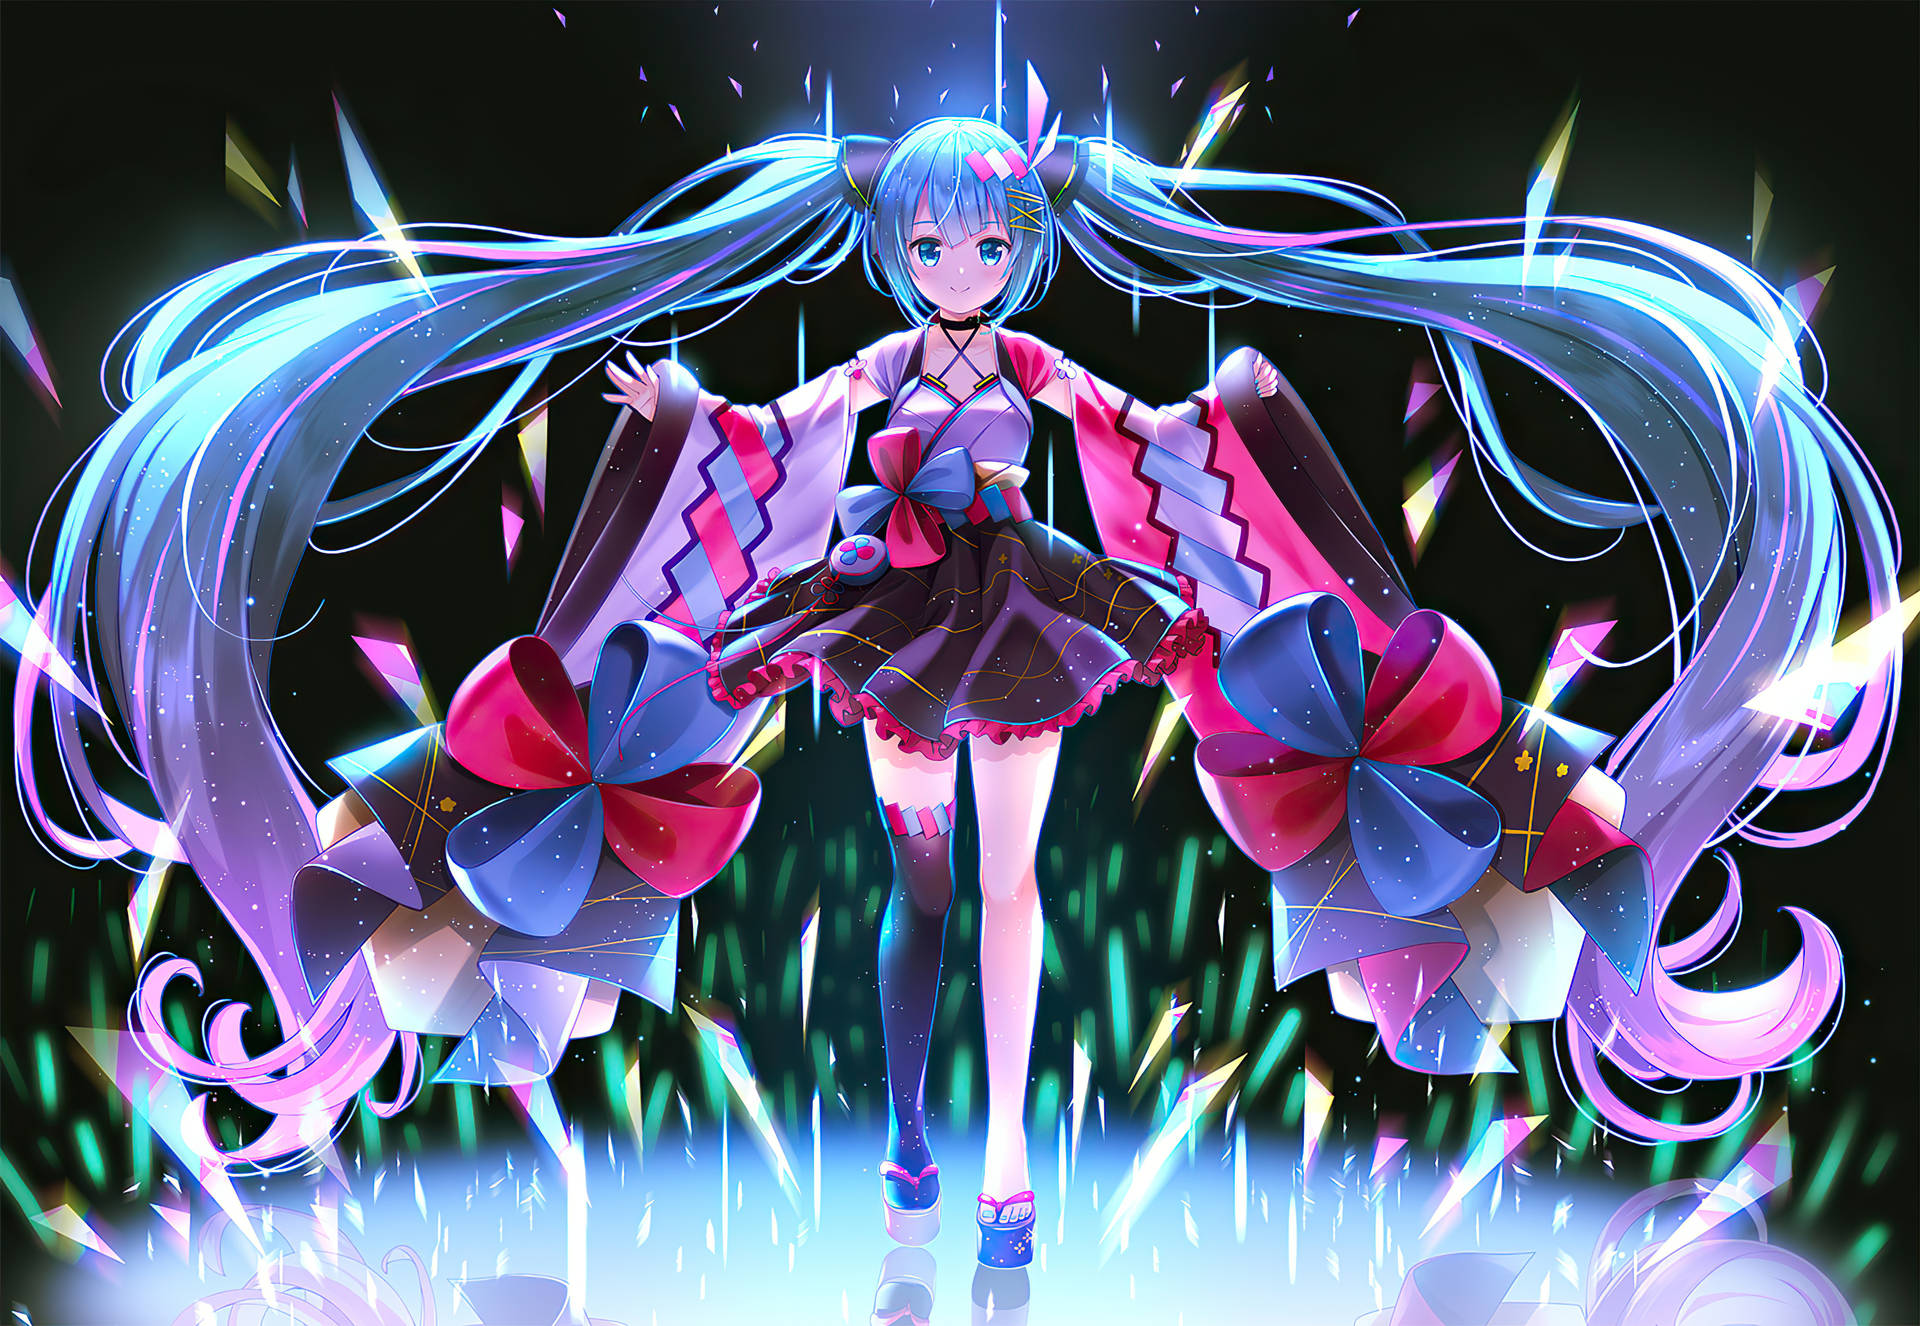 Hatsune Miku - A Virtual Vocaloid Singer. Background